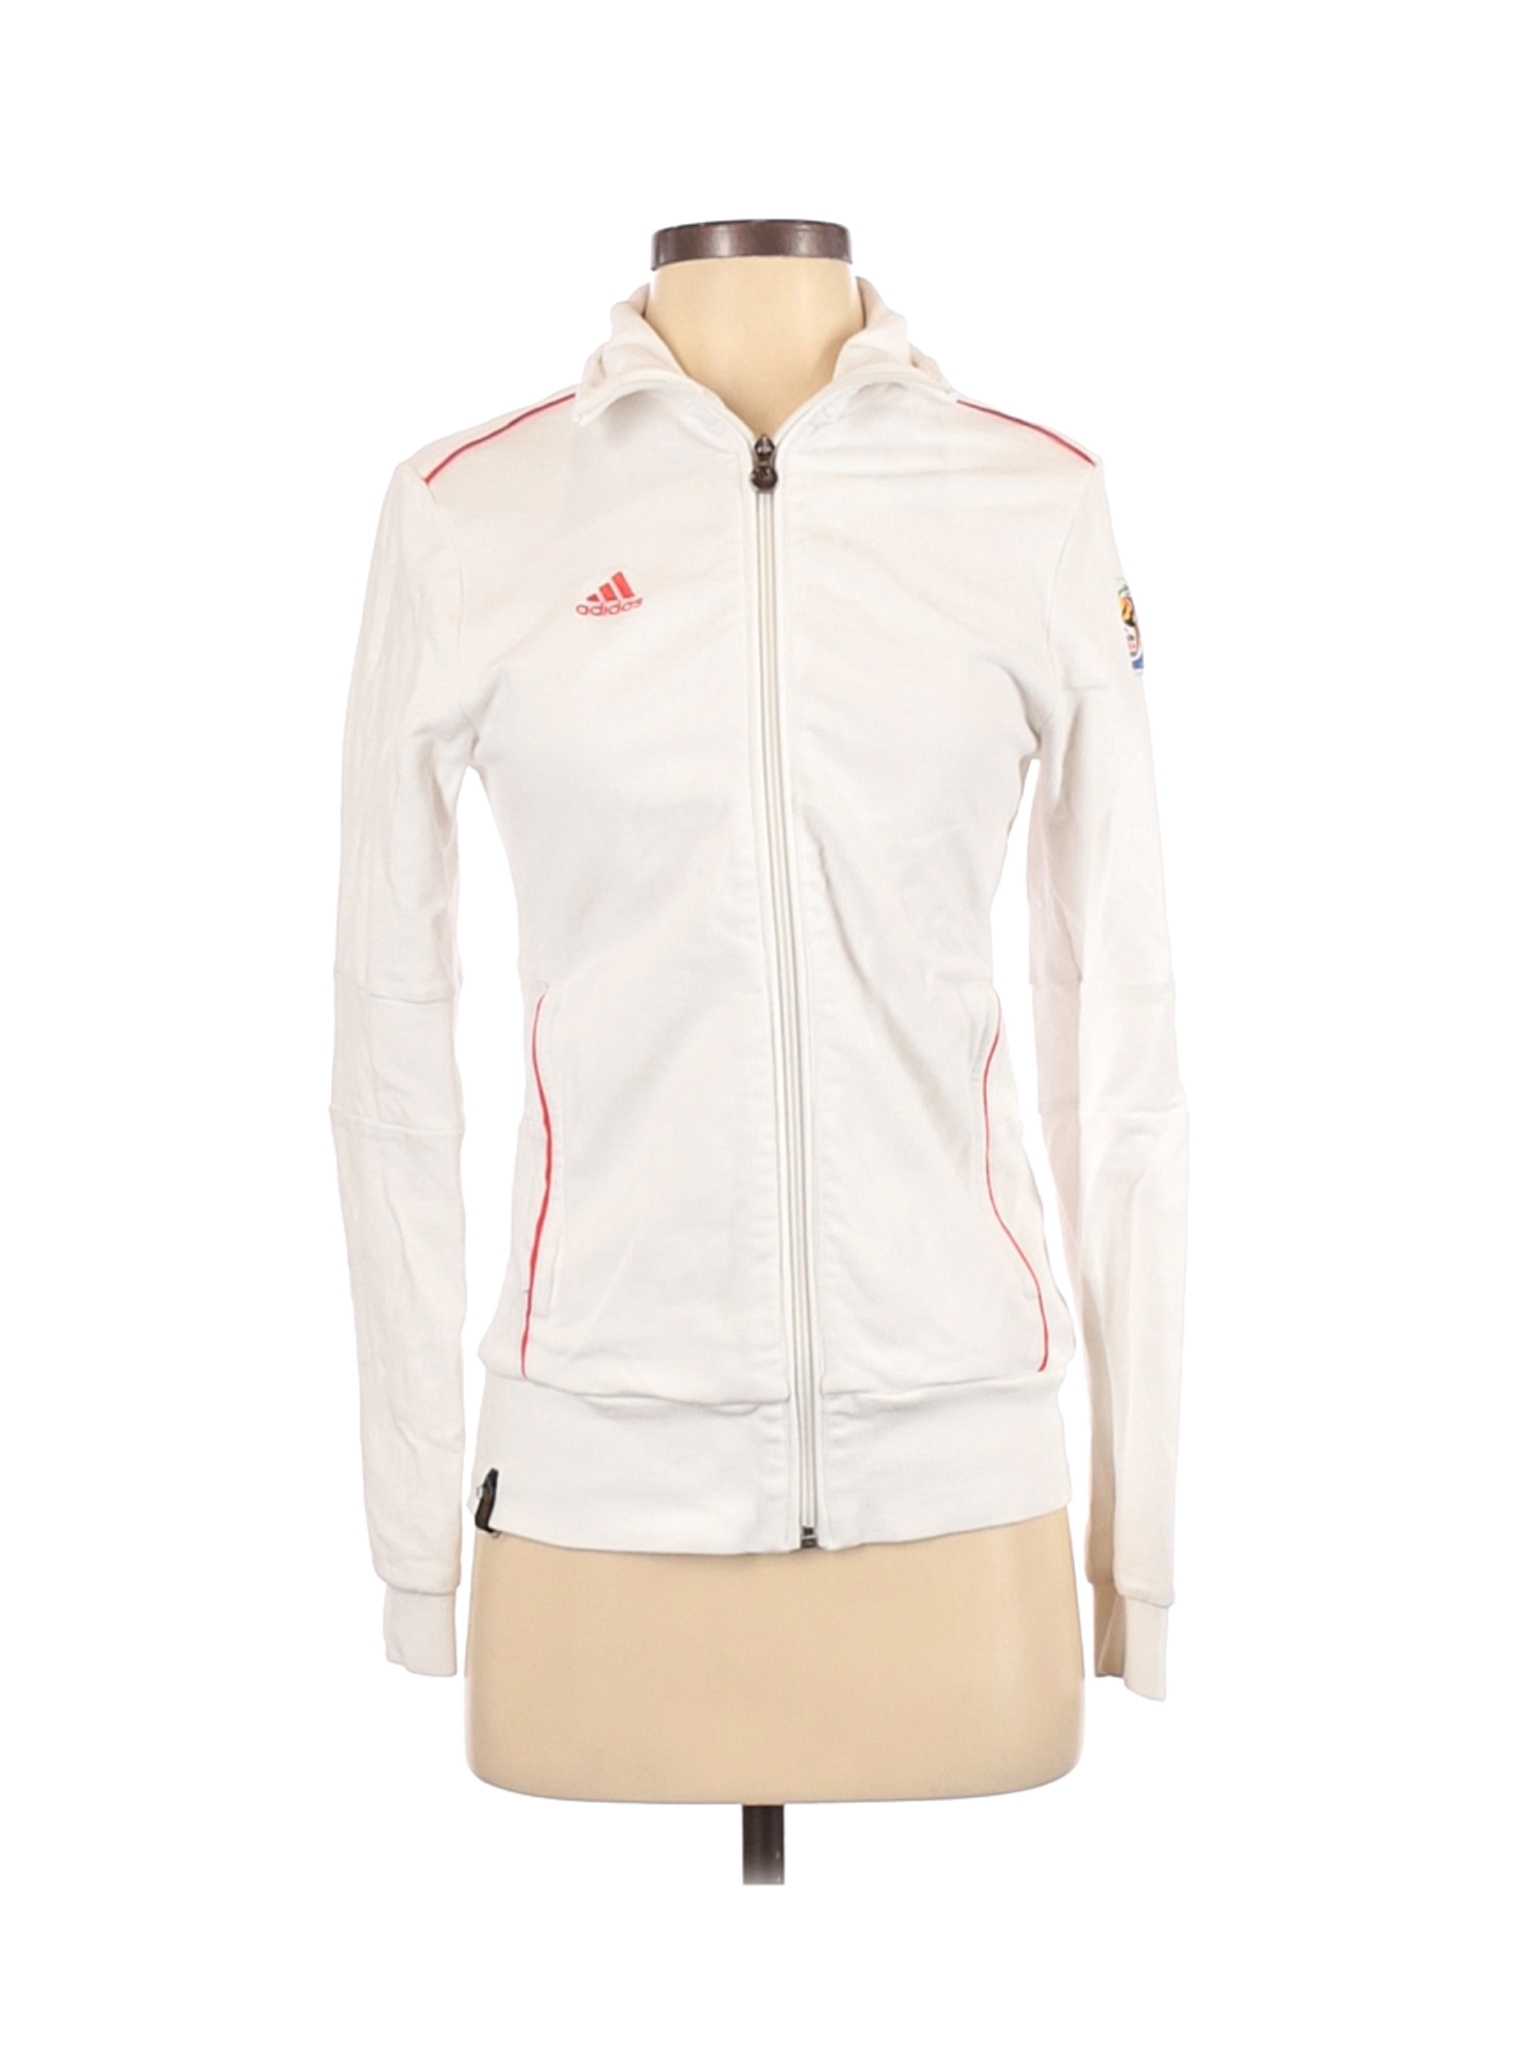 Adidas Solid White Track Jacket Size M - 68% off | thredUP